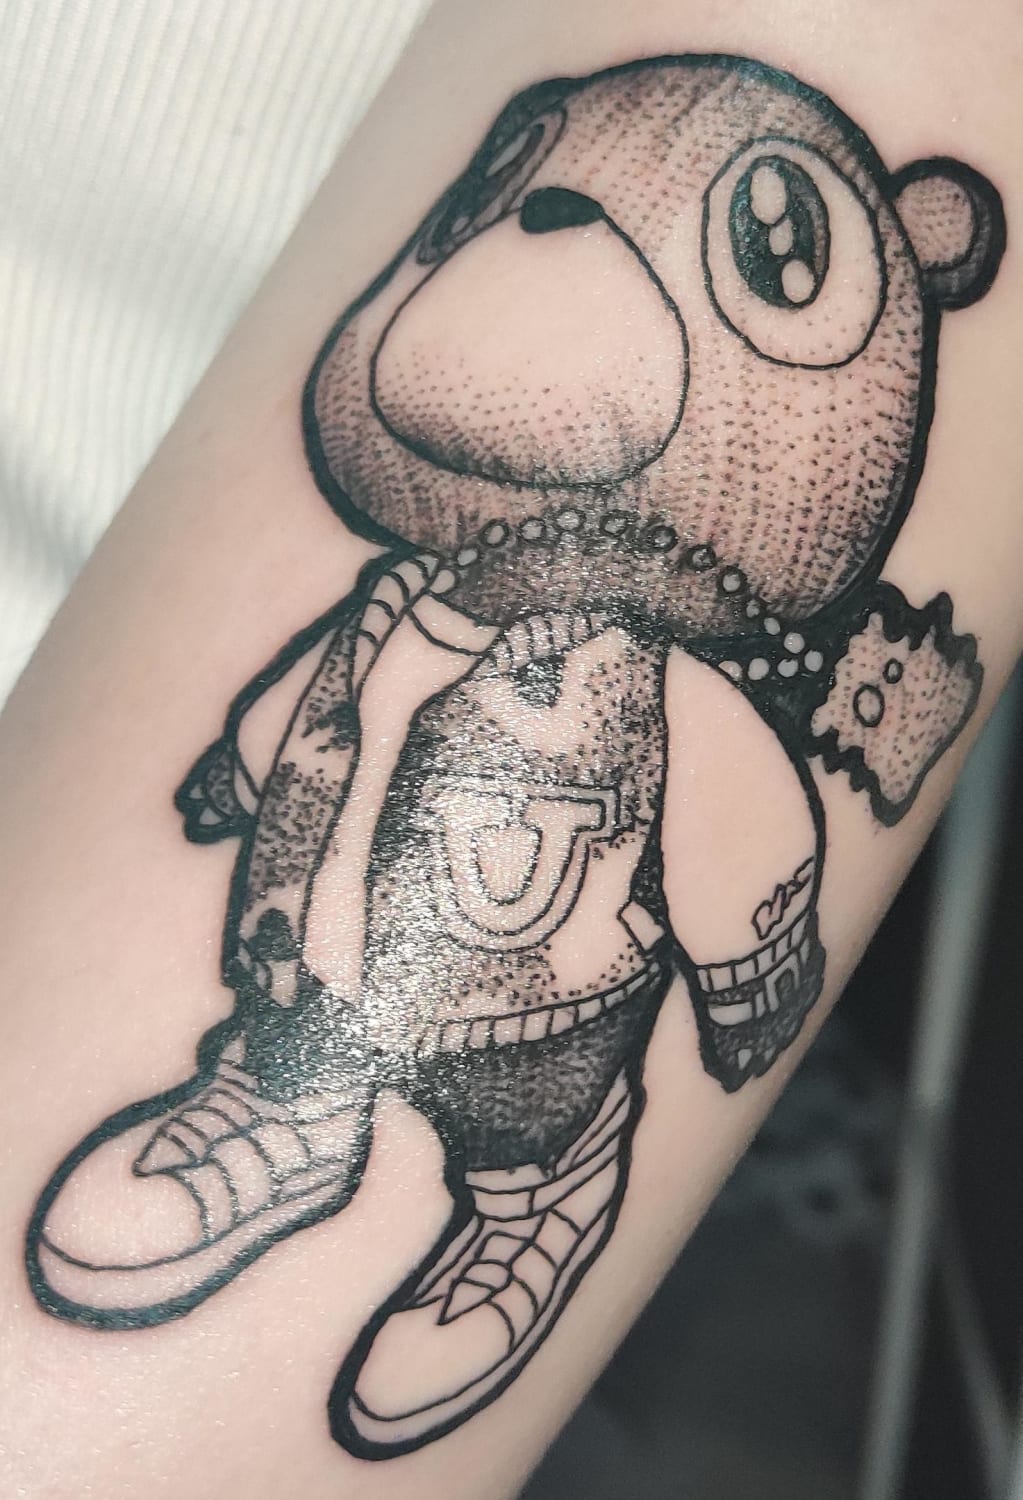 My first piece done by Amanda Fox at Nirvana Tattoos, Glasgow, Scotland.